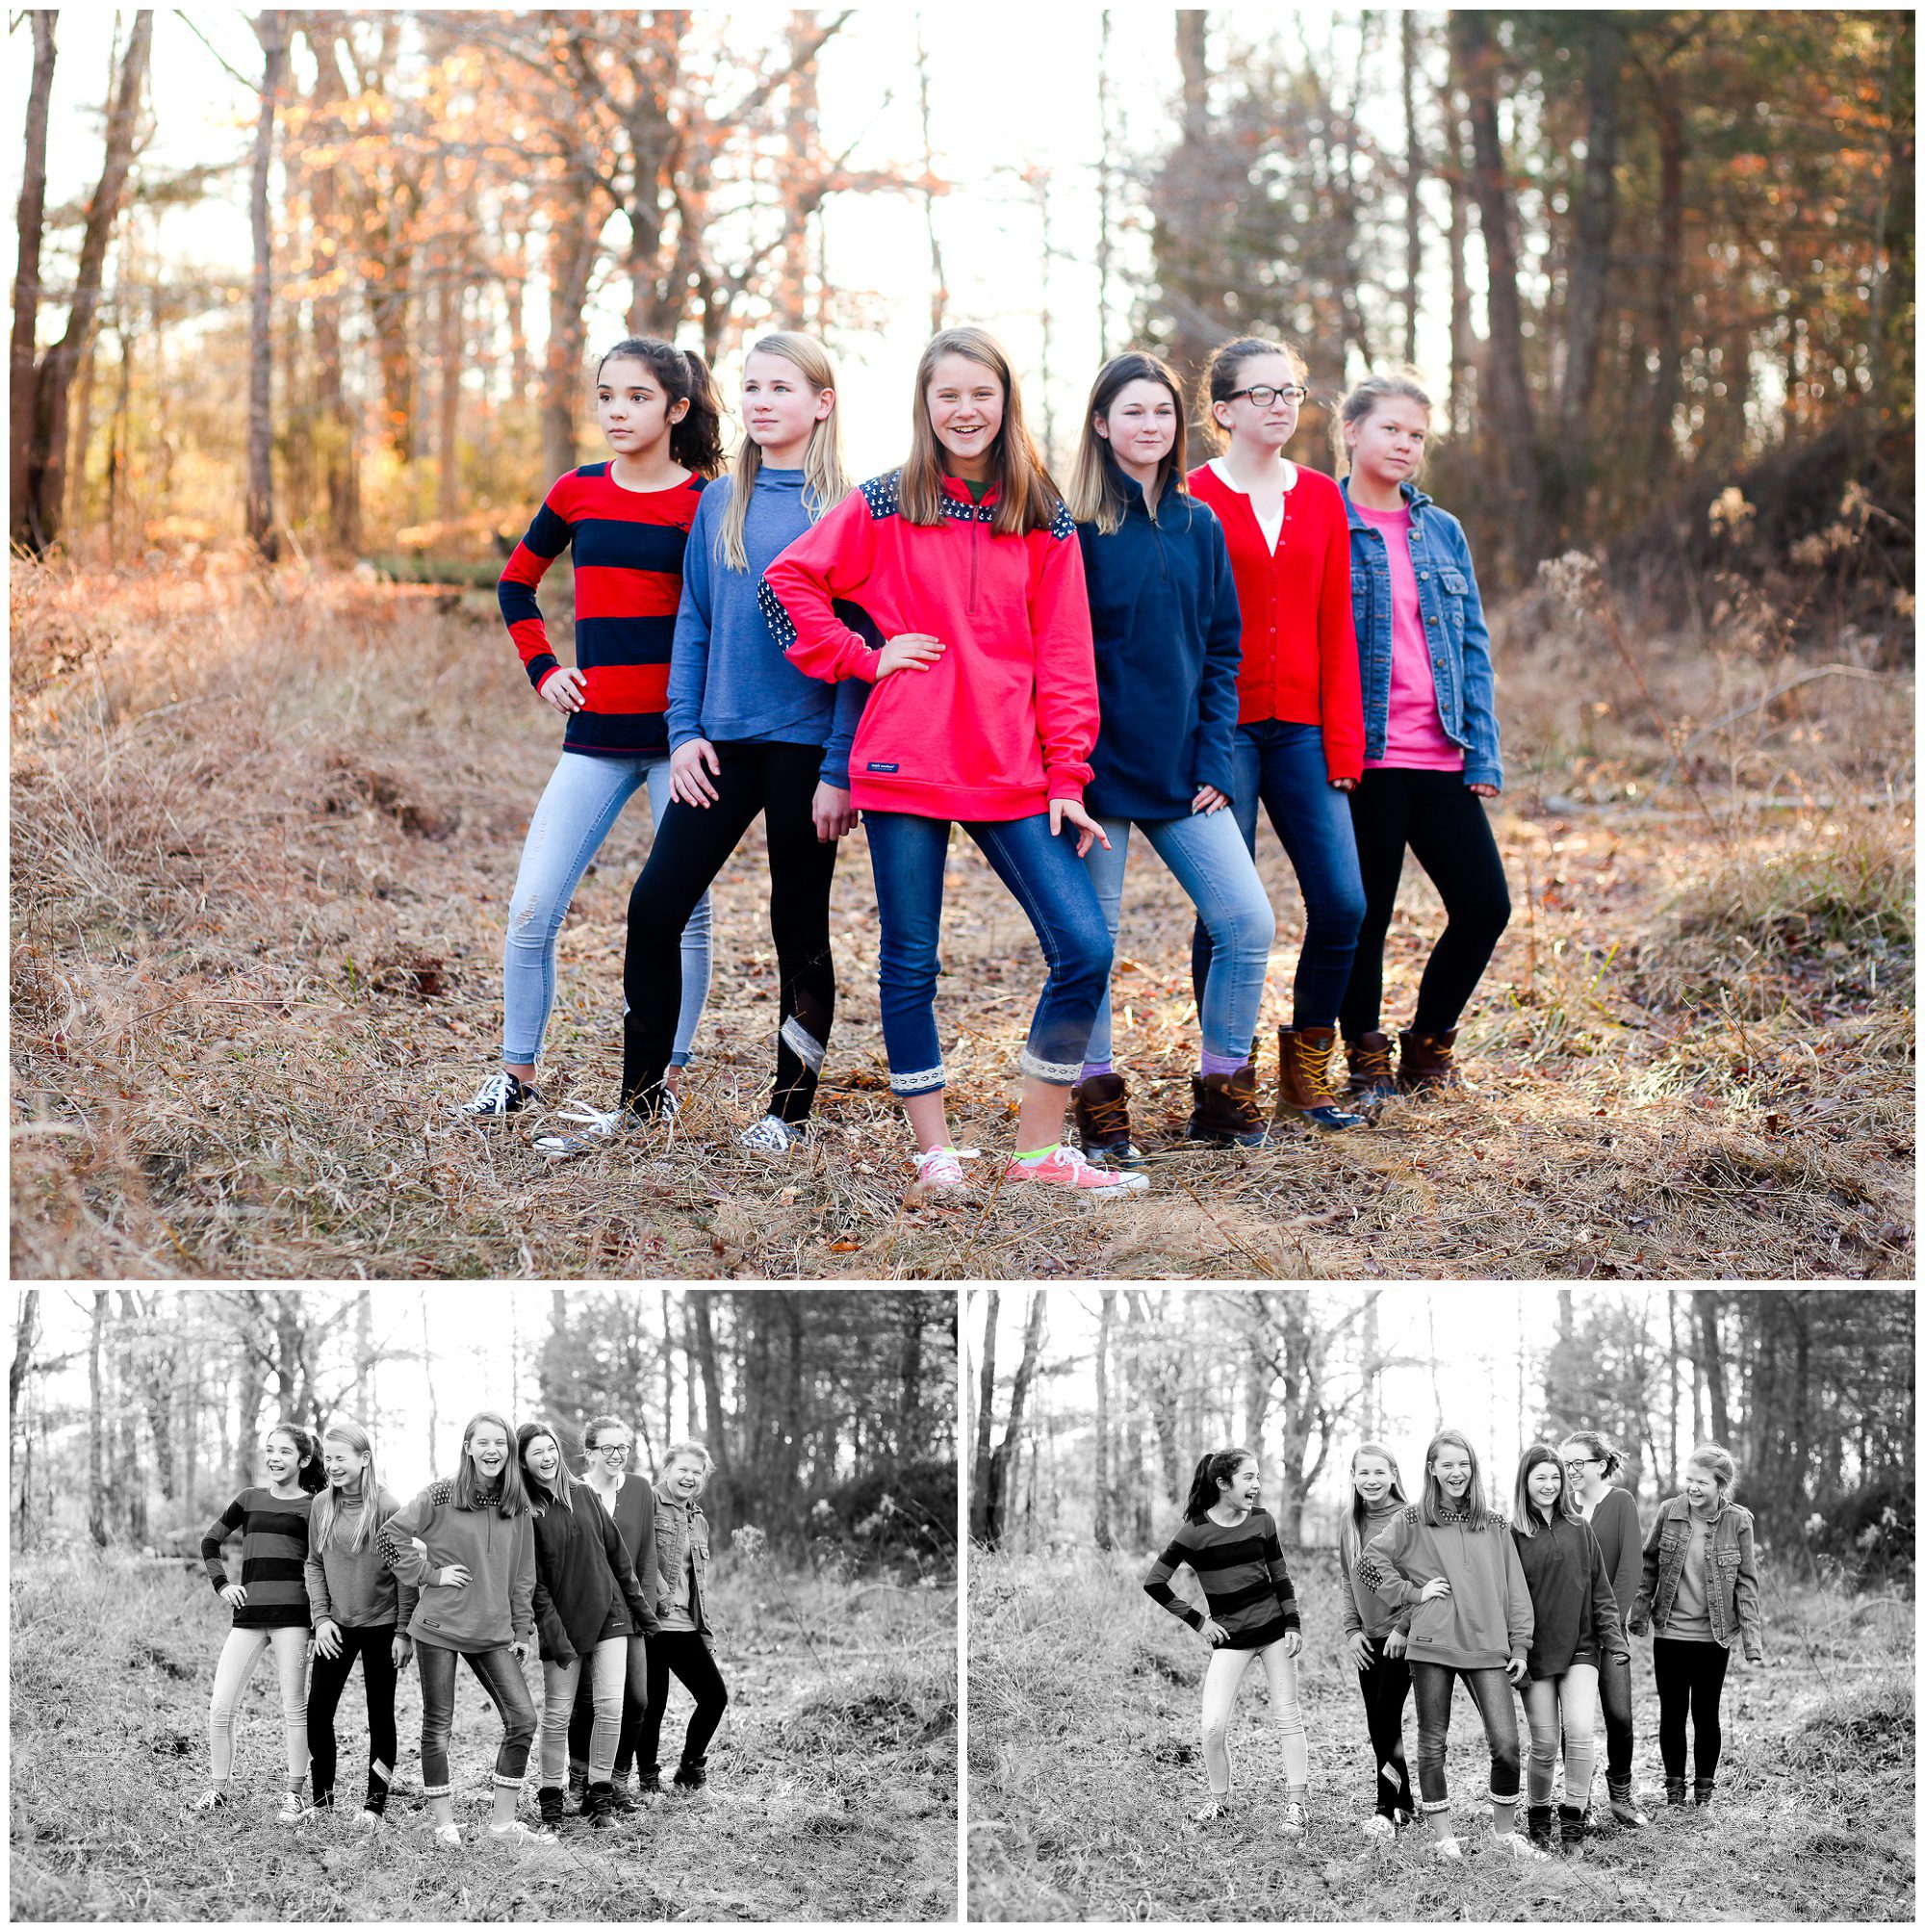 charlottesville friends 13 thirteen teenager tween portraits girls teens pictrues photographer fun friendship